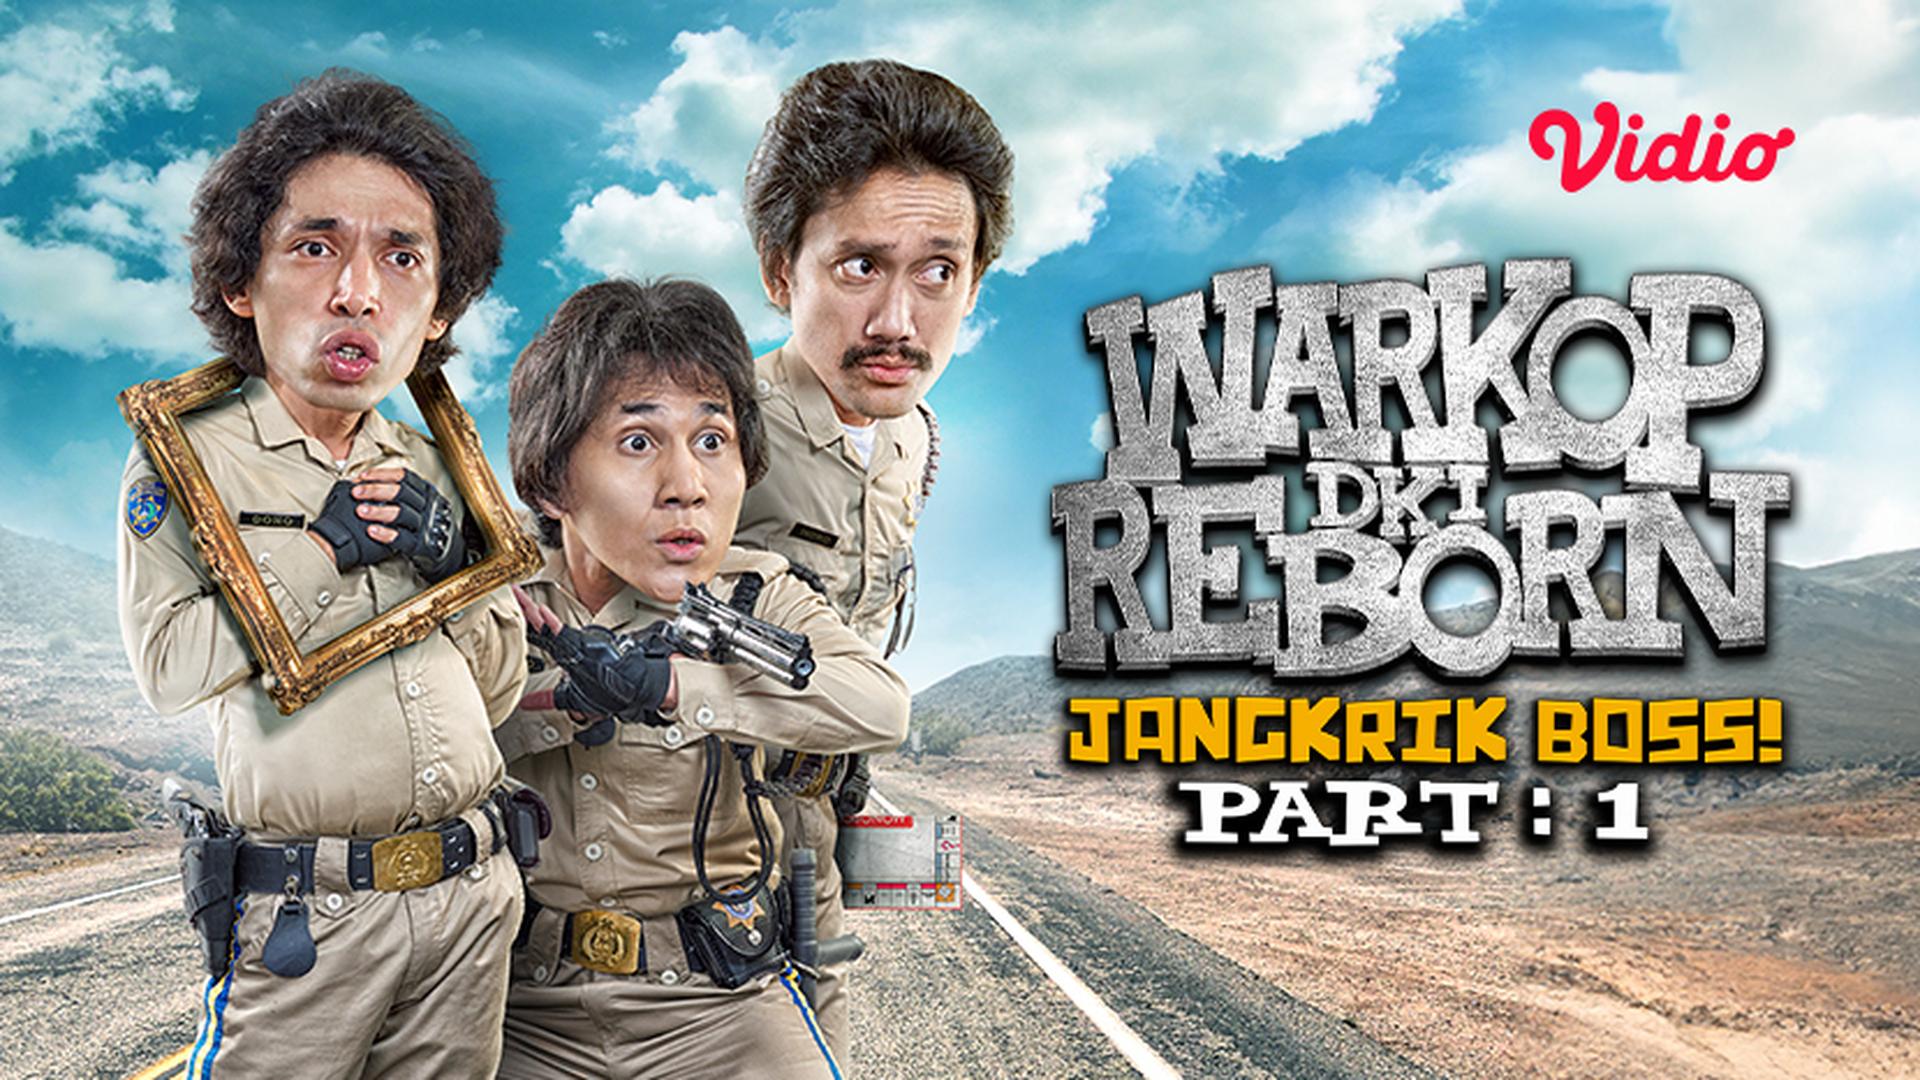 Nonton Warkop Dki Reborn Jangkrik Boss Part 1 2016 Vidio 